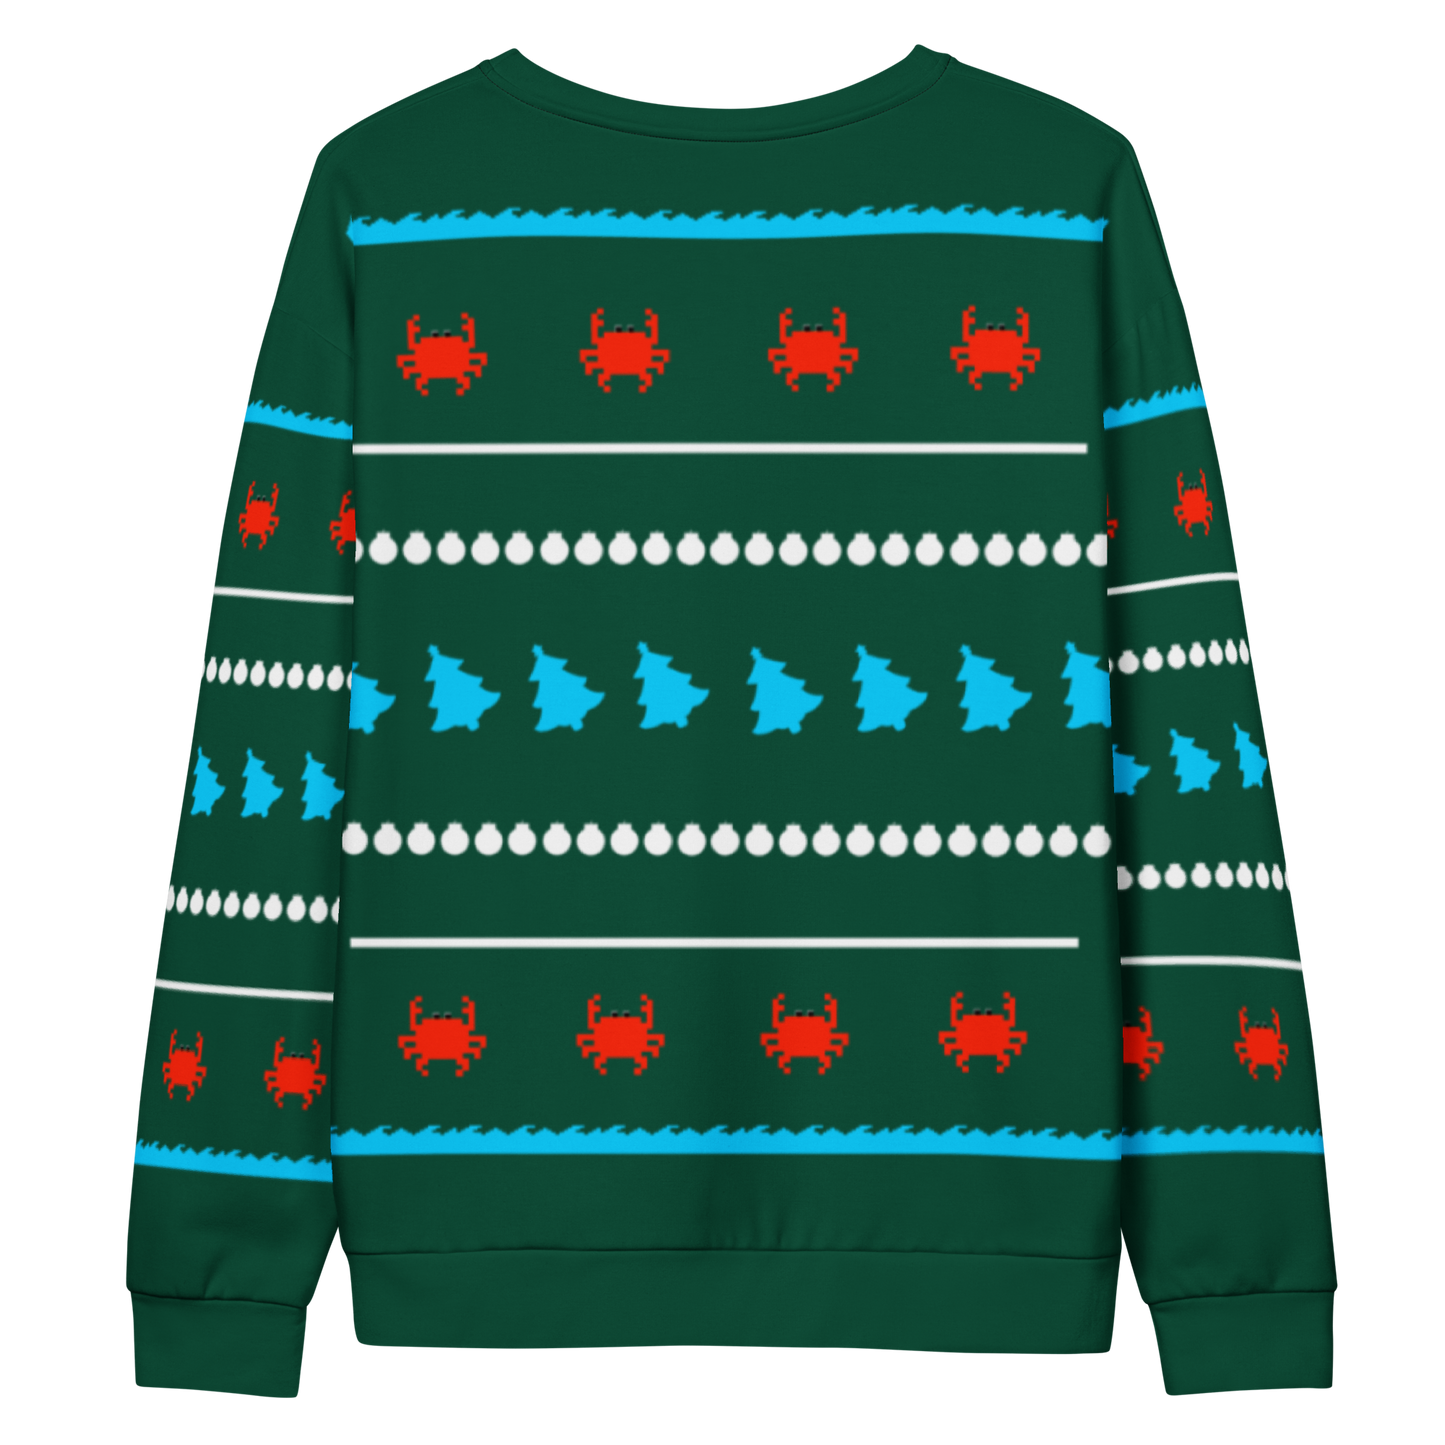 Santa Claws Christmas Sweater